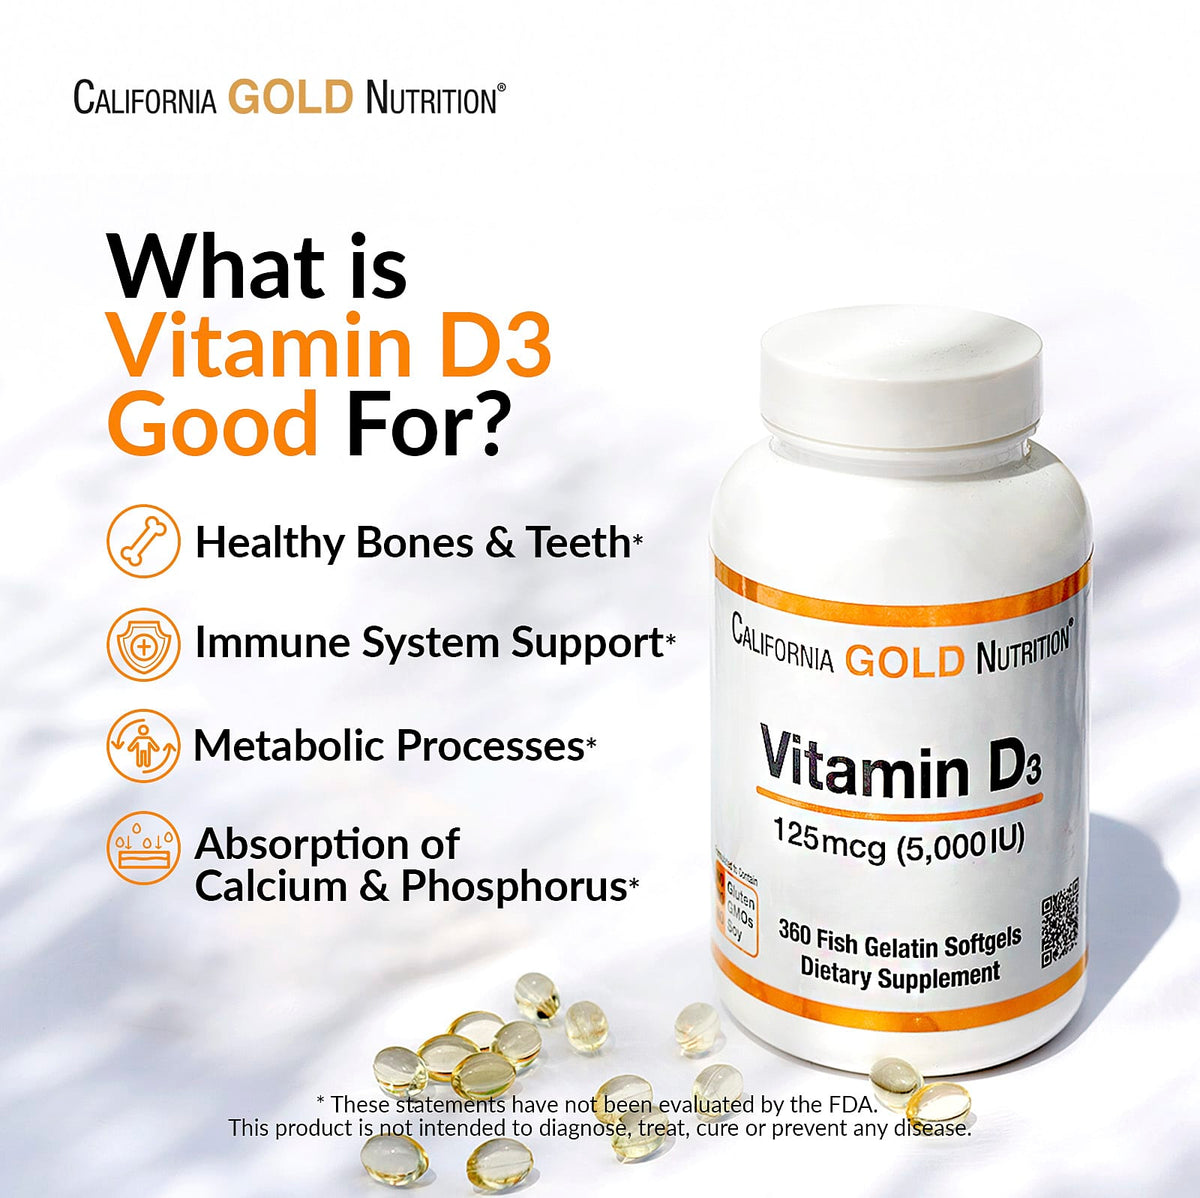 California Gold Nutrition, Vitamin D3, 125 mcg (5,000 IU), 90 Fish Gelatin Softgels